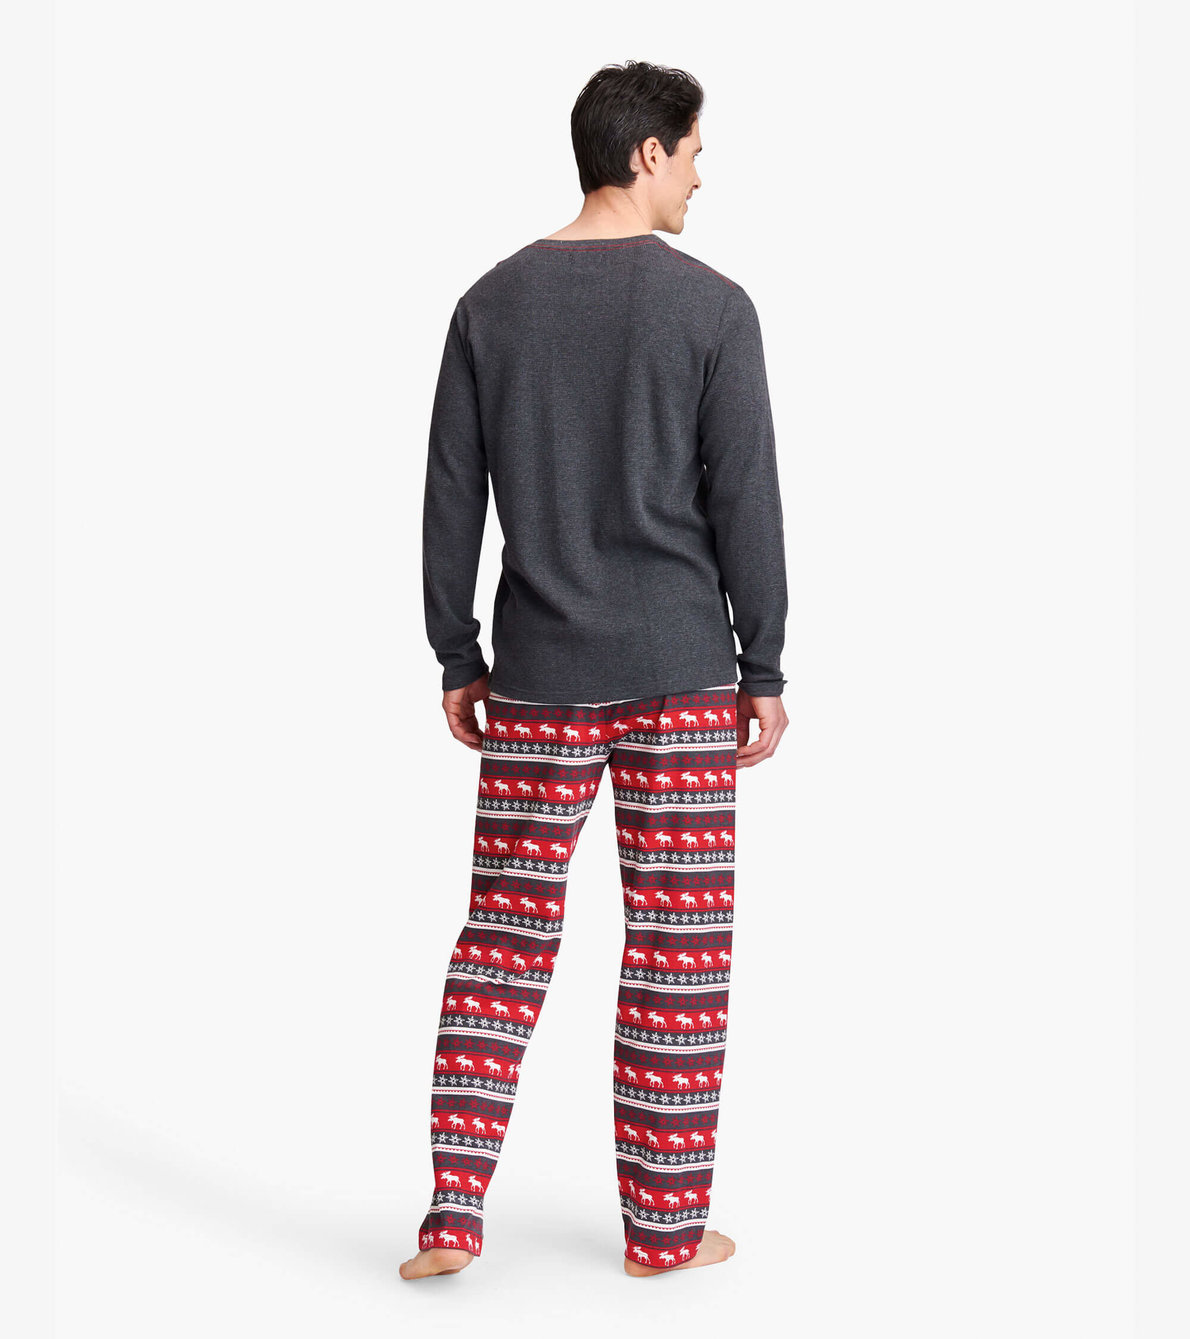 View larger image of Fair Isle Men's Tee and Pants Pajama Separates